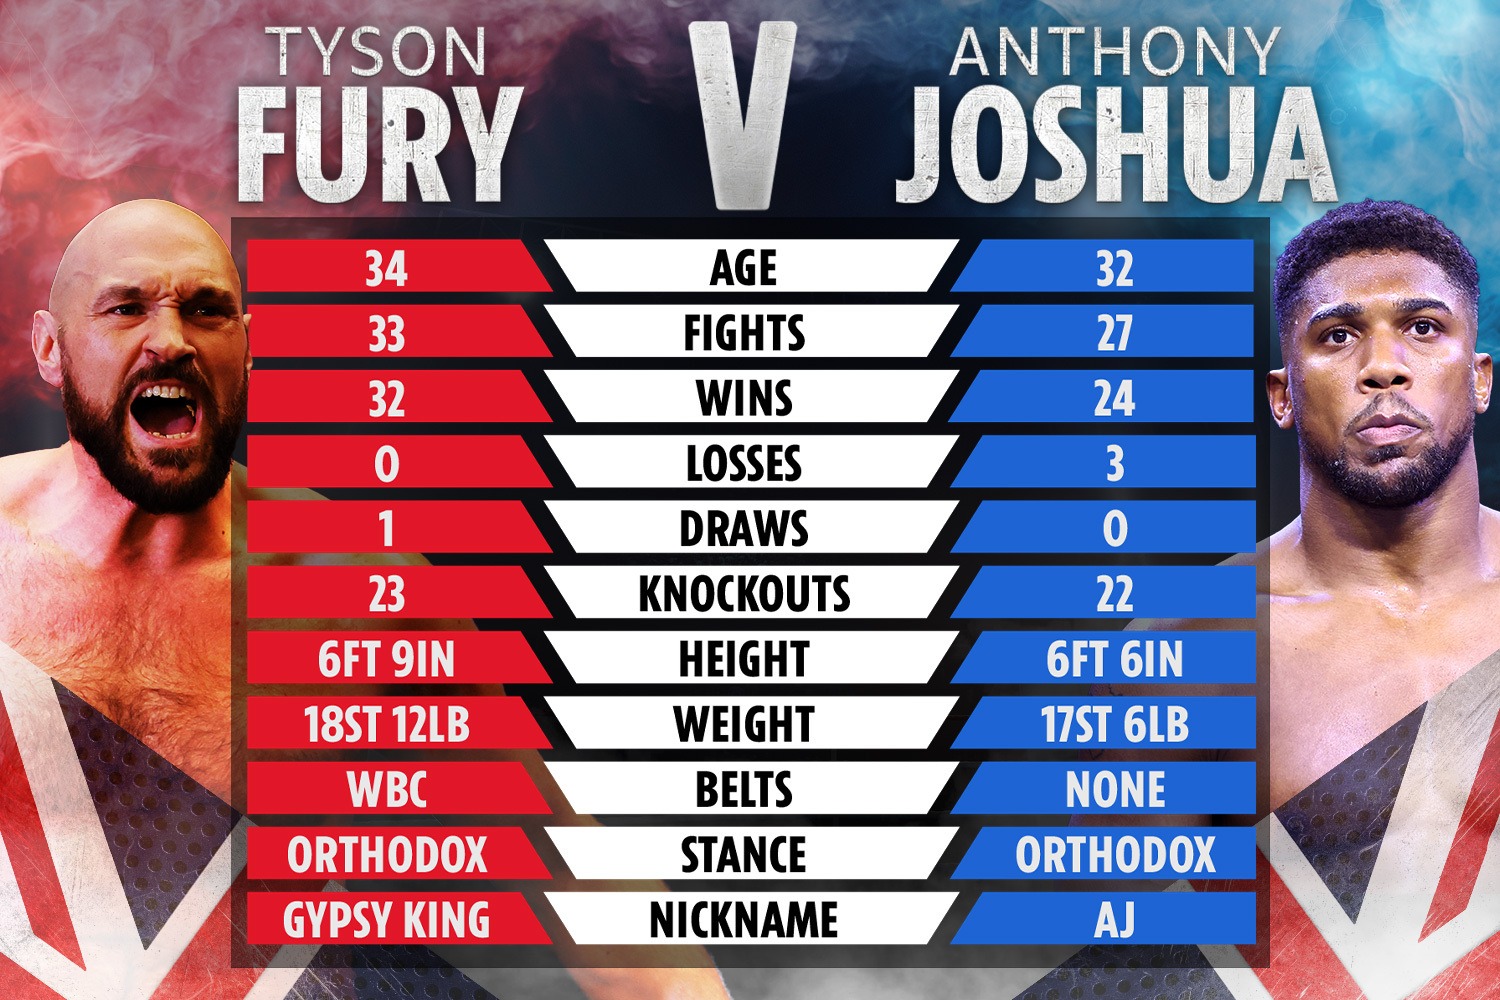 , Tyson Fury has offered Derek Chisora trilogy fight despite Anthony Joshua talks ‘getting there’, says Eddie Hearn